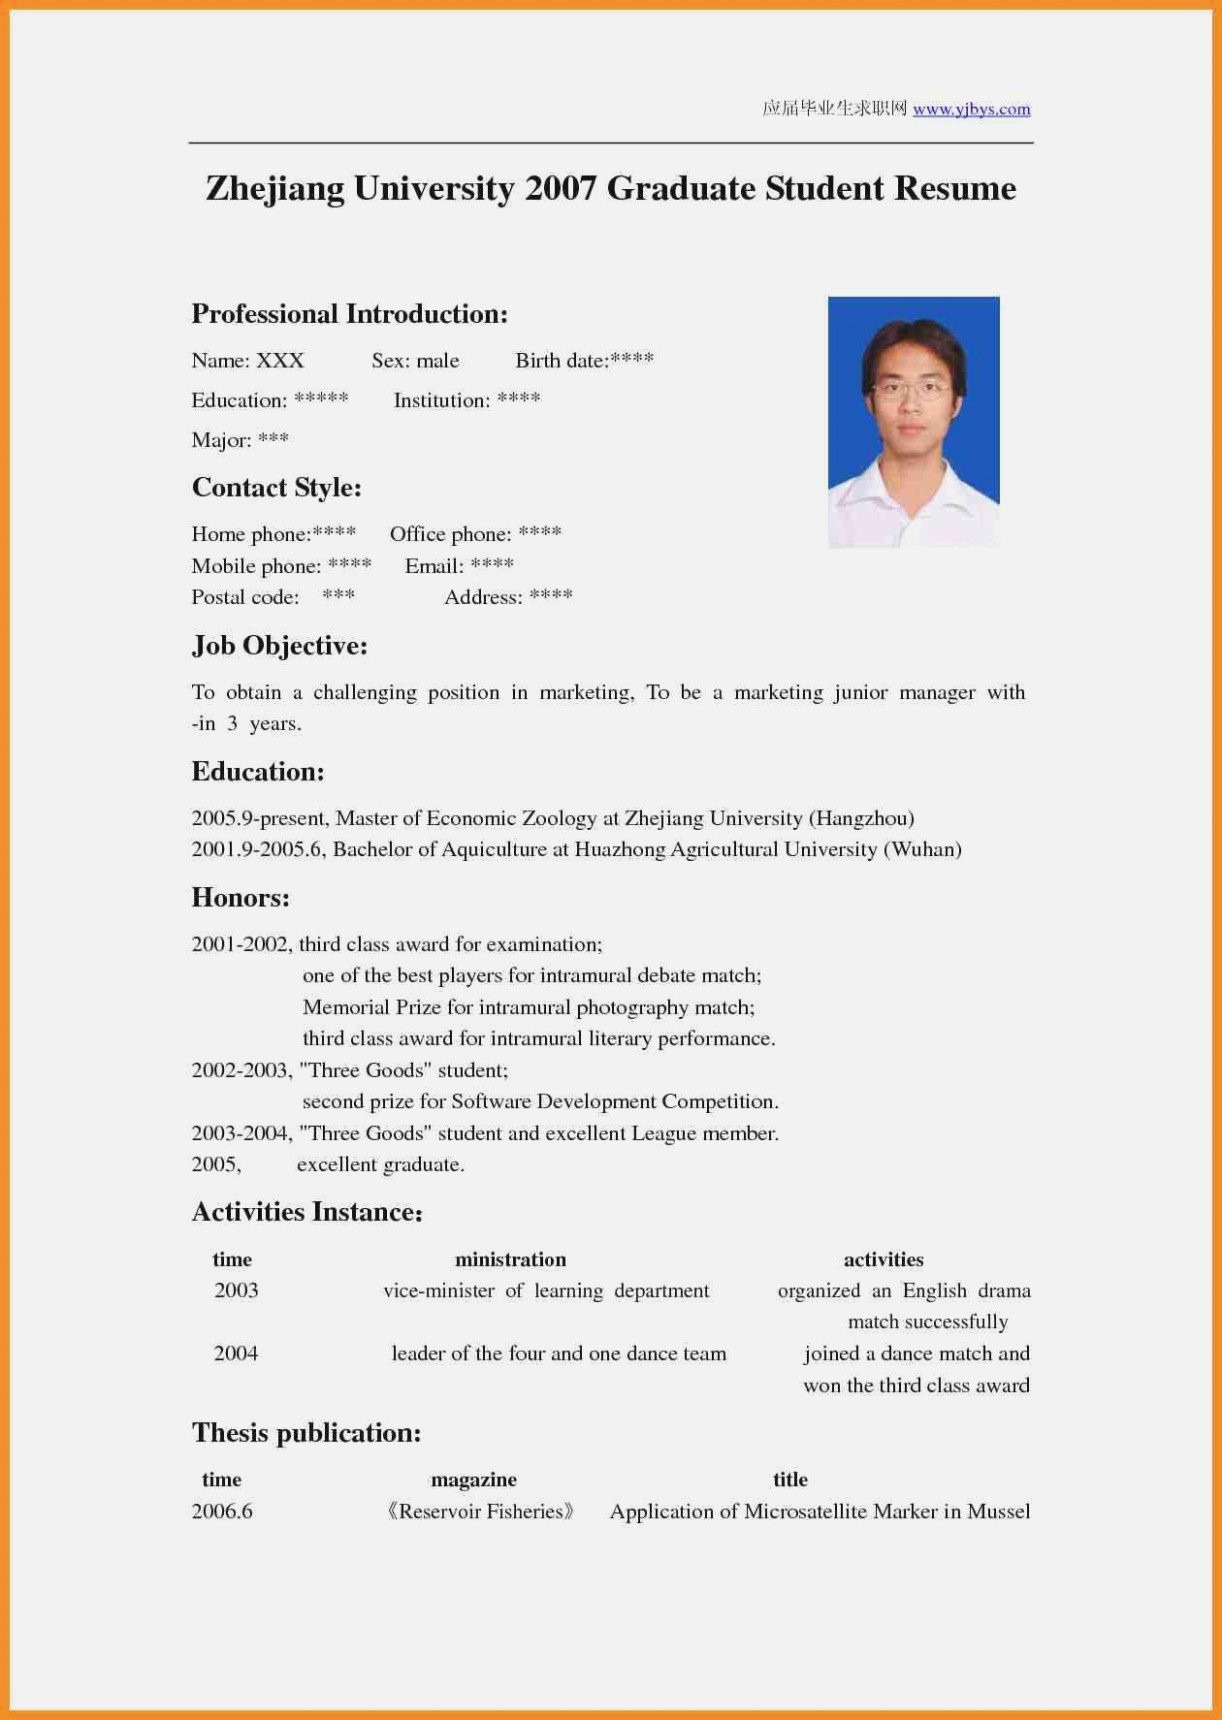 How To Do A Resume 14 How To Make A Resume Student Resume Samples How Do You Make A Resume how to do a resume|wikiresume.com